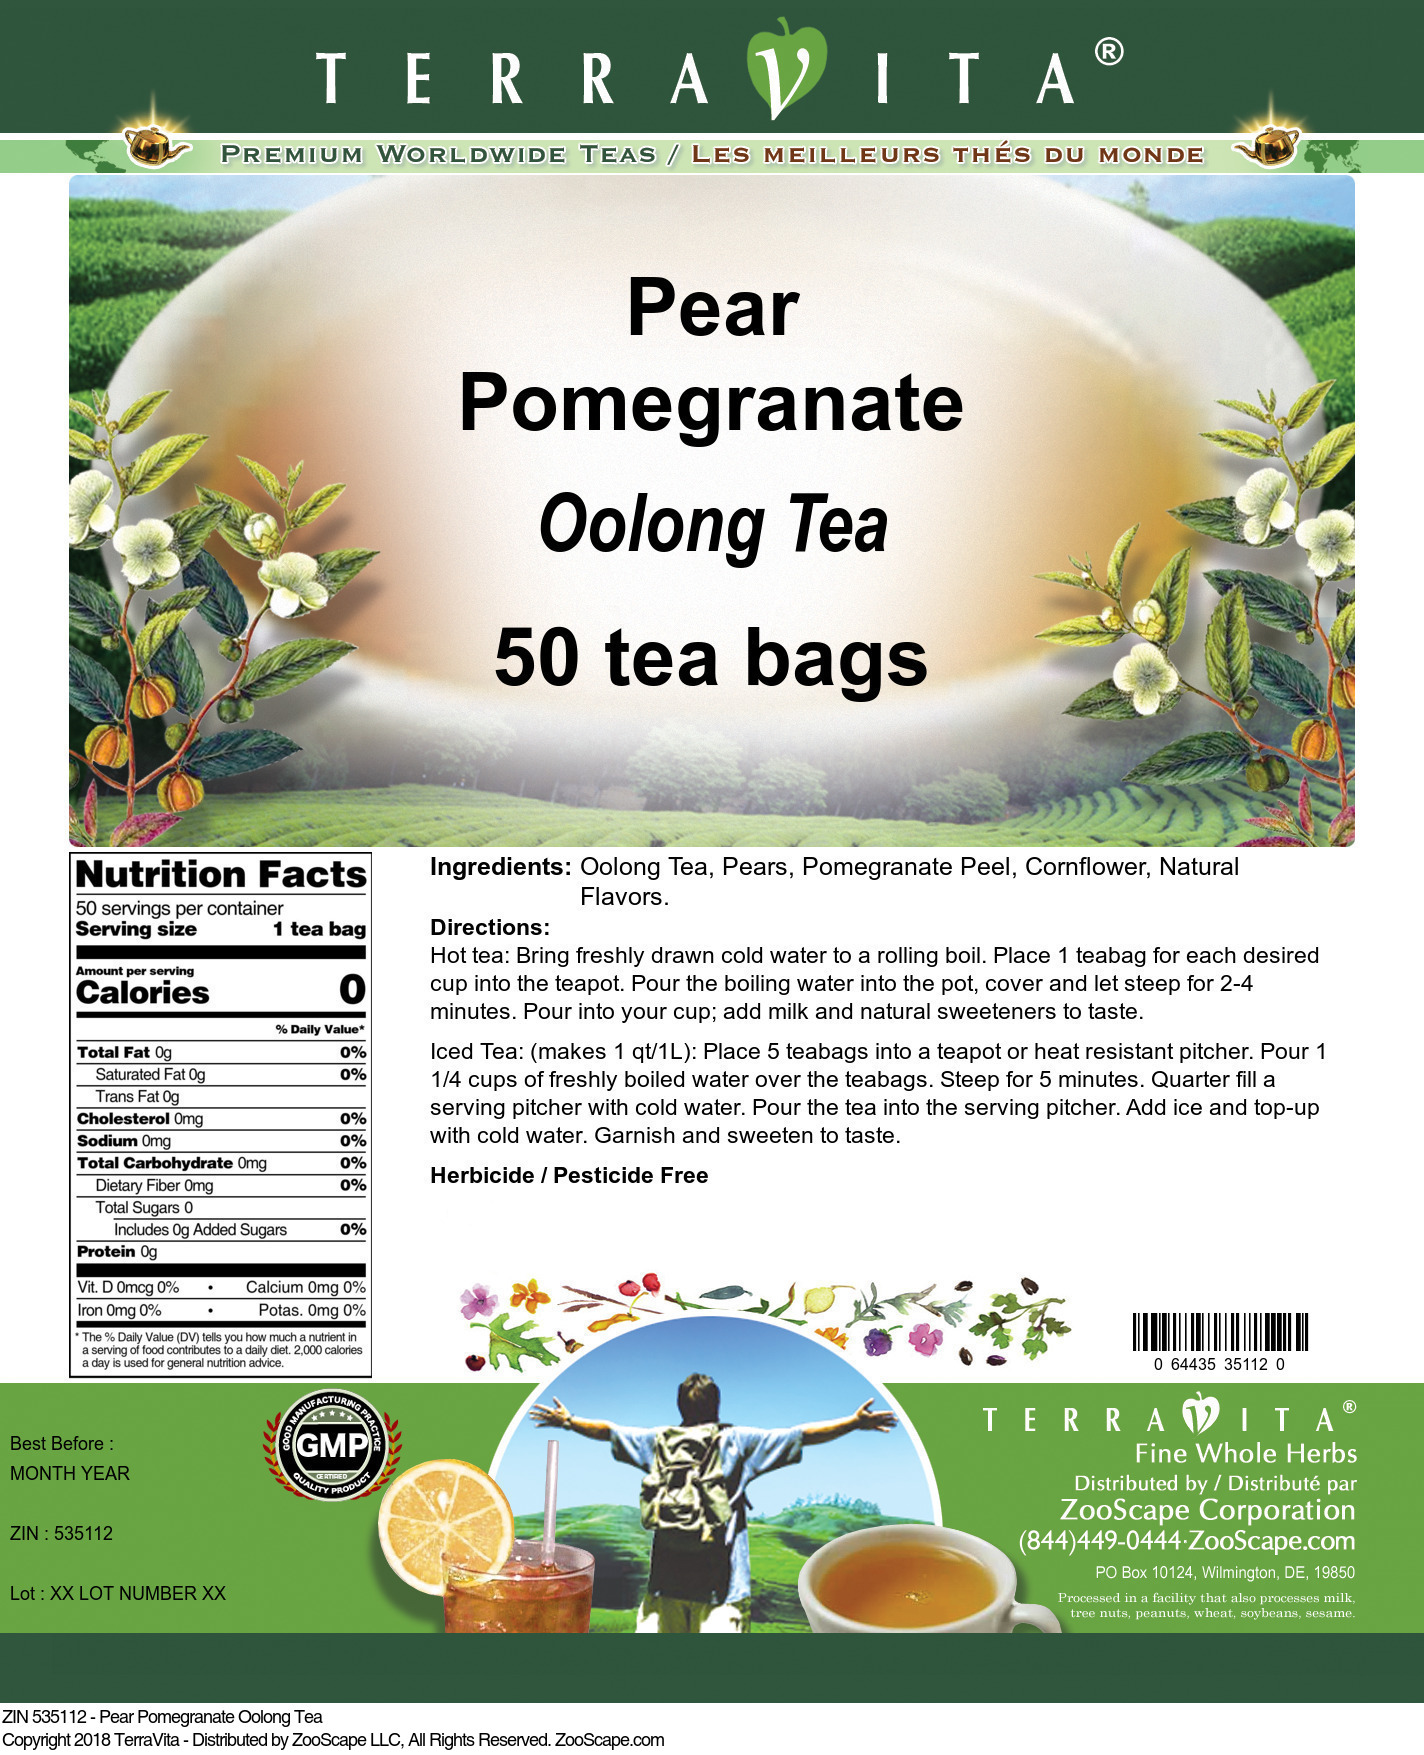 Pear Pomegranate Oolong Tea - Label